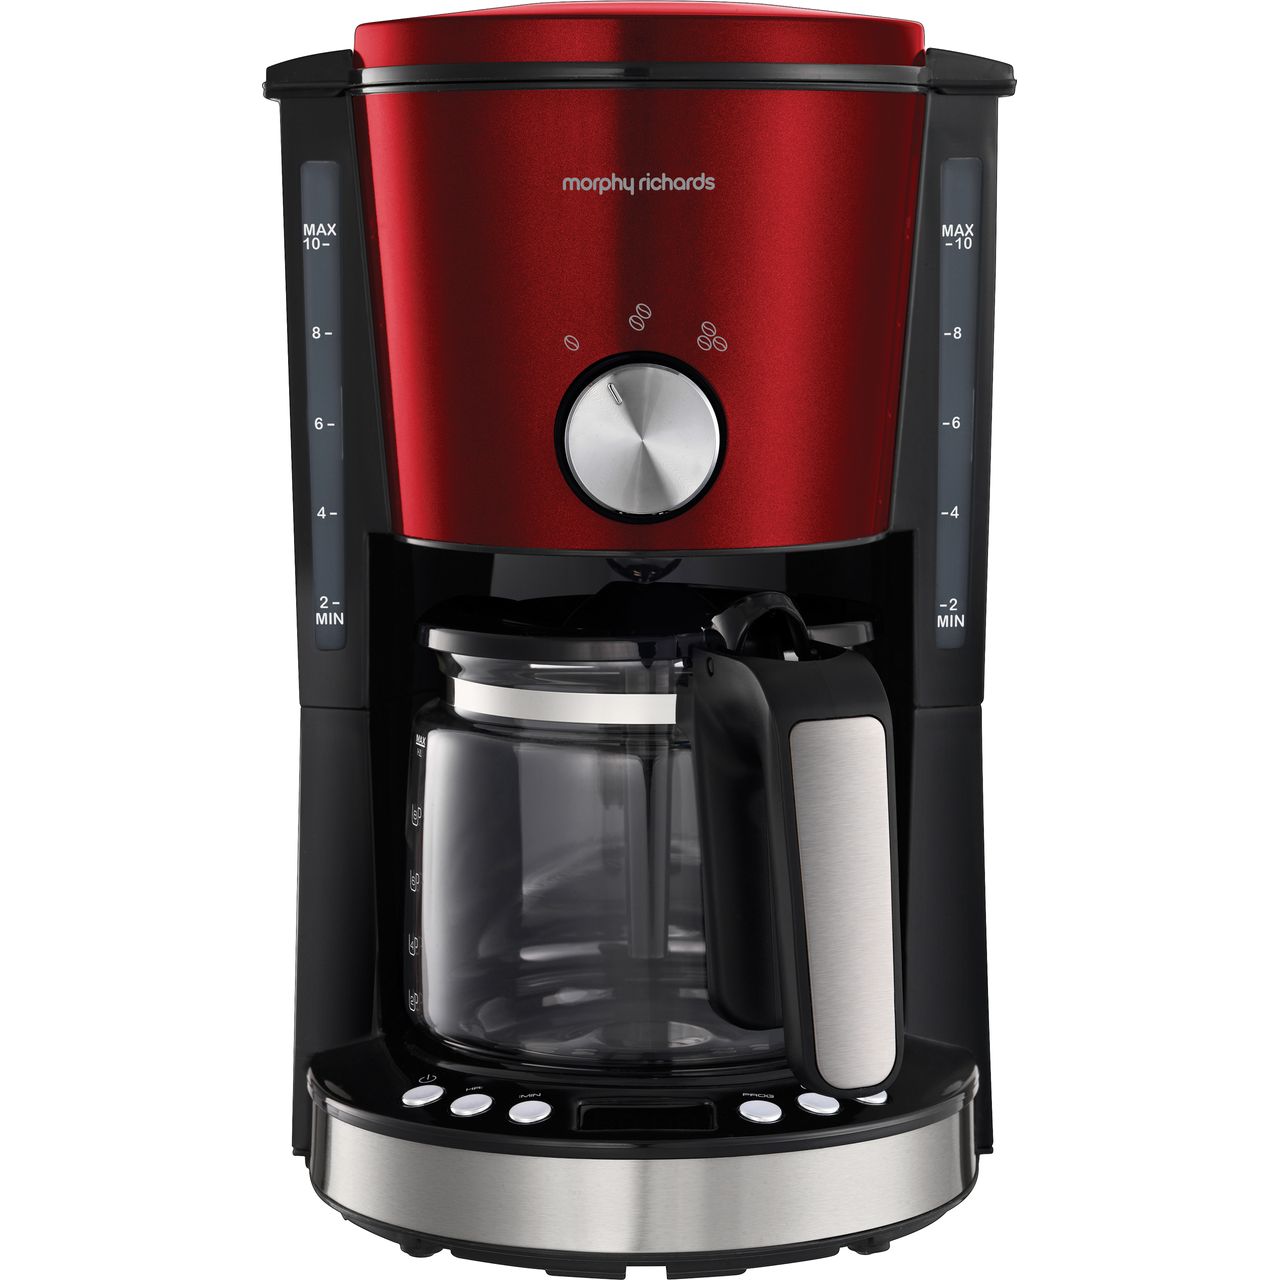 Morphy Richards Evoke 162522 Filter Coffee Machine Review